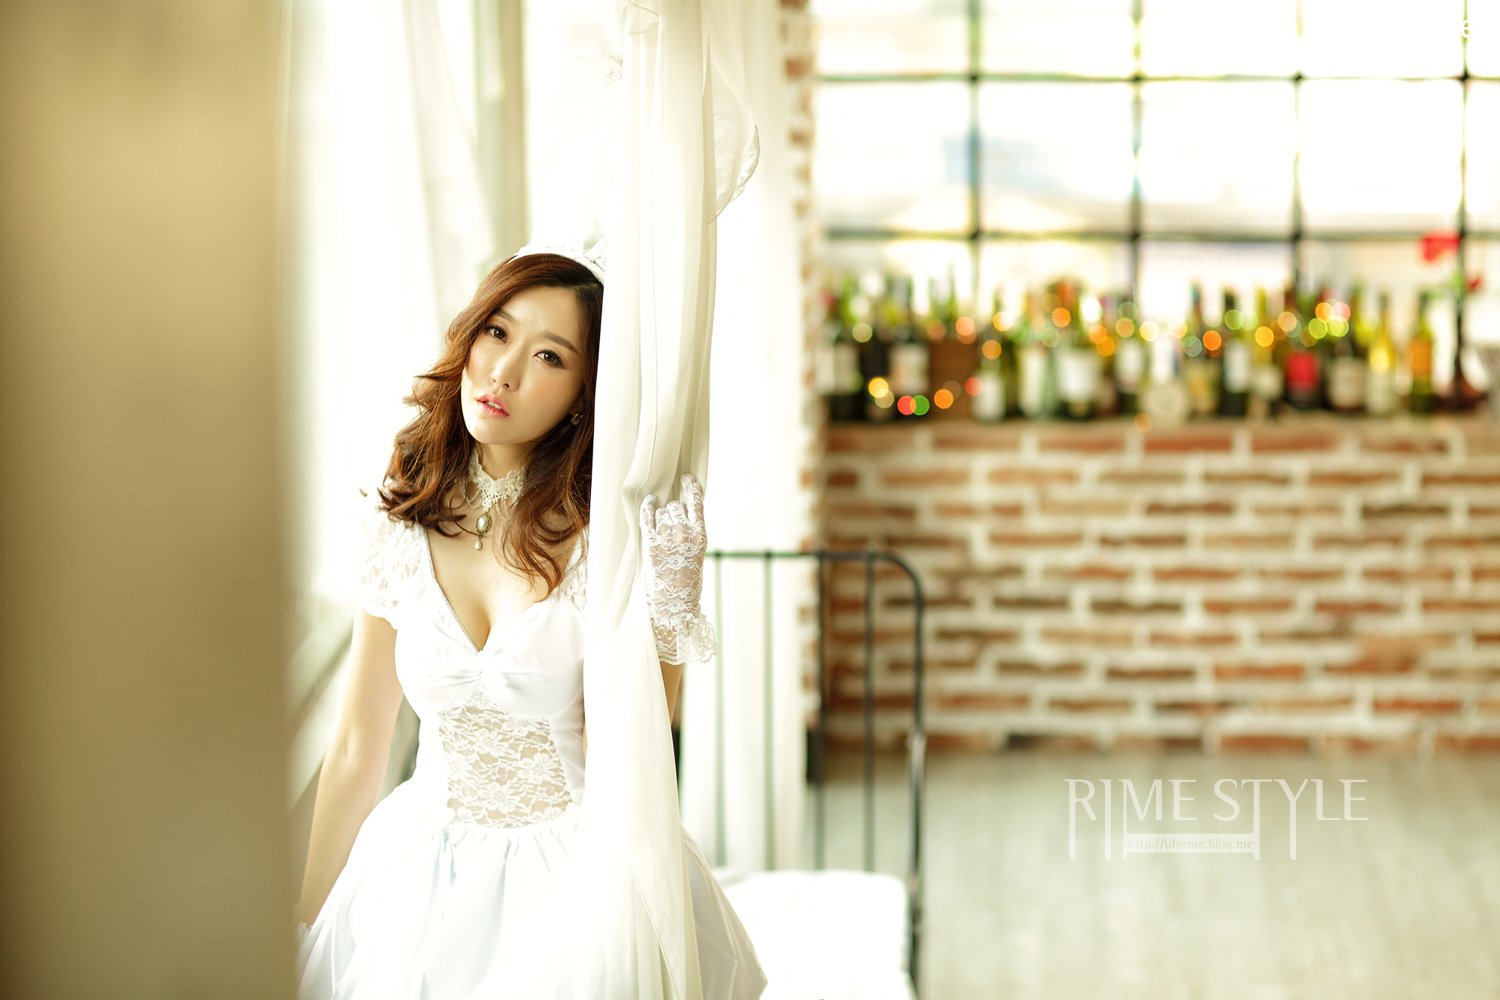 Image Oh Ha Ru Model Beautiful Image - Studio Photoshoot Collection - TruePic.net - Picture-41